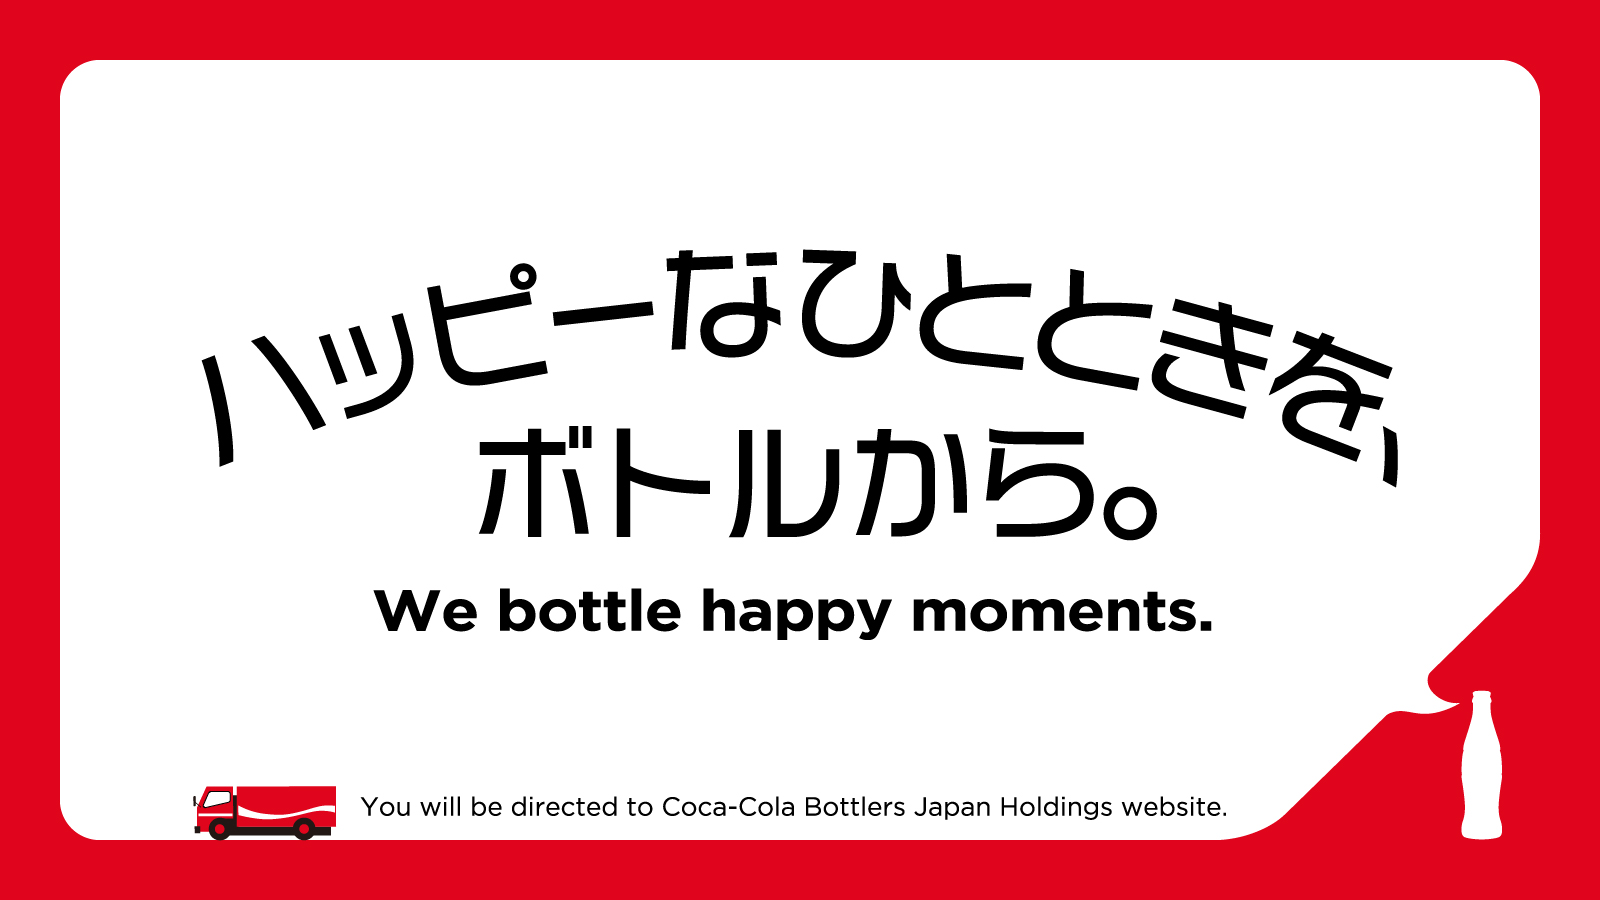 We bottle happy moments.